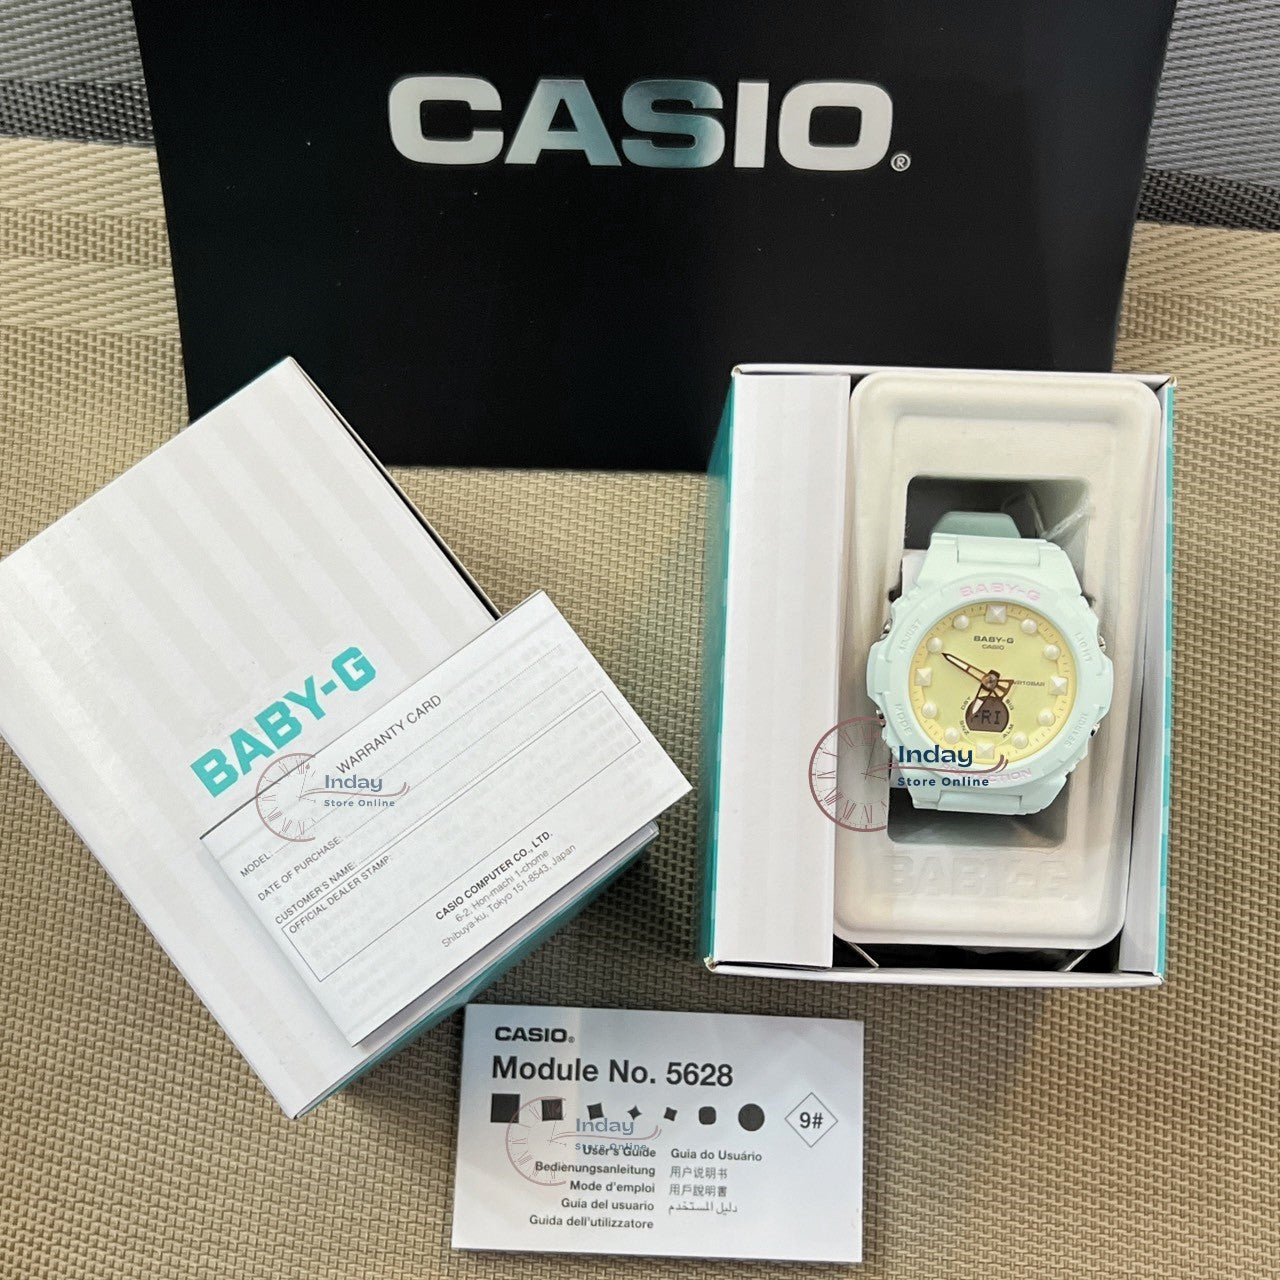 Casio Baby-G Women's Watch BGA-320FH-3A